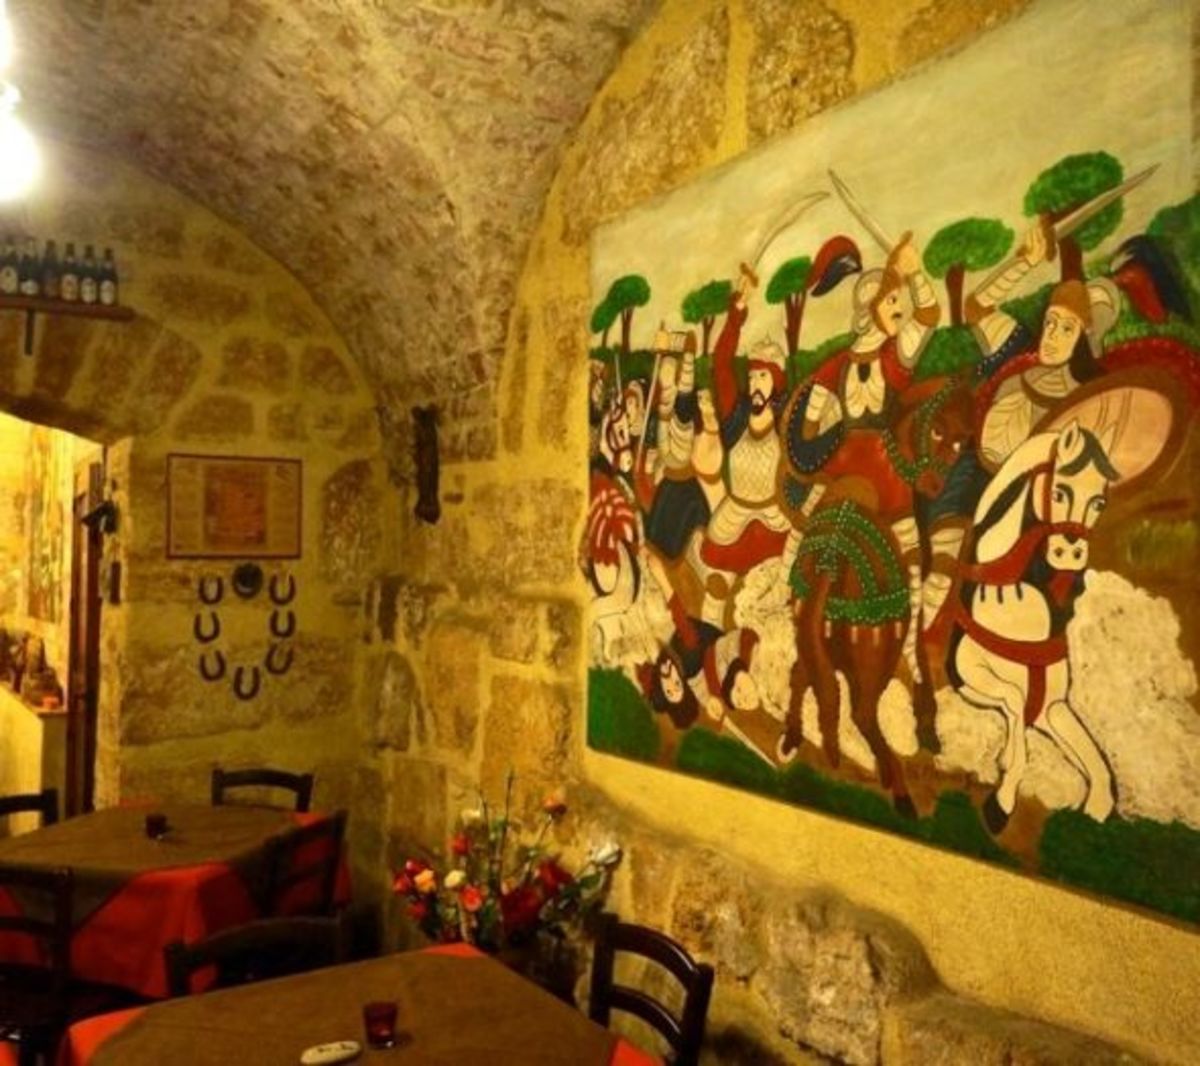 Restaurant in Sicily